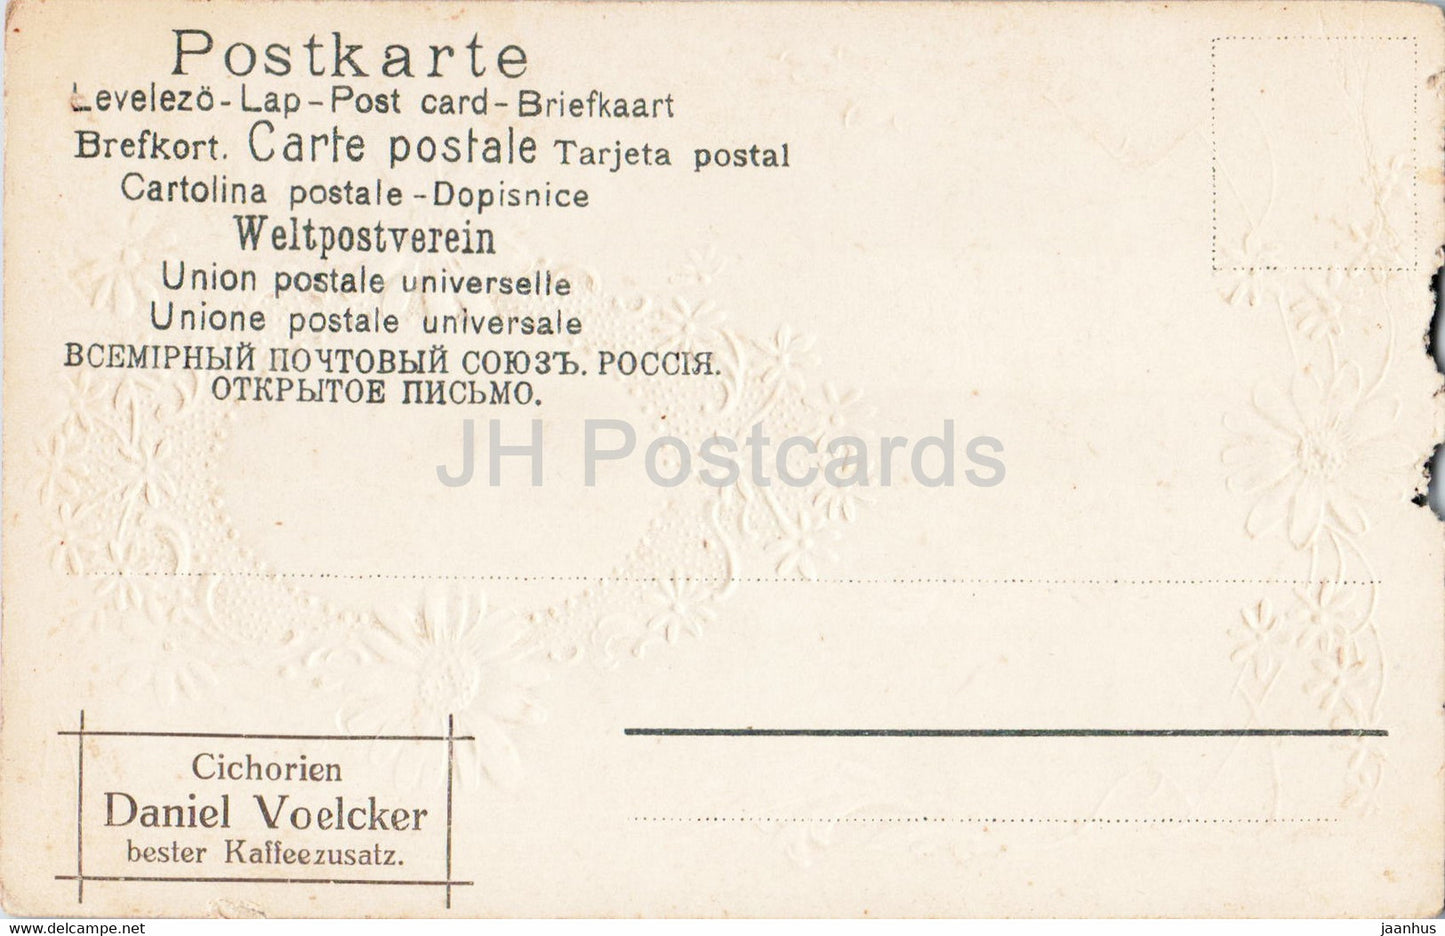 flowers - landscape - Cichorien Daniel Voelcker bester Kaffeezusatz - old postcard - Germany - unused